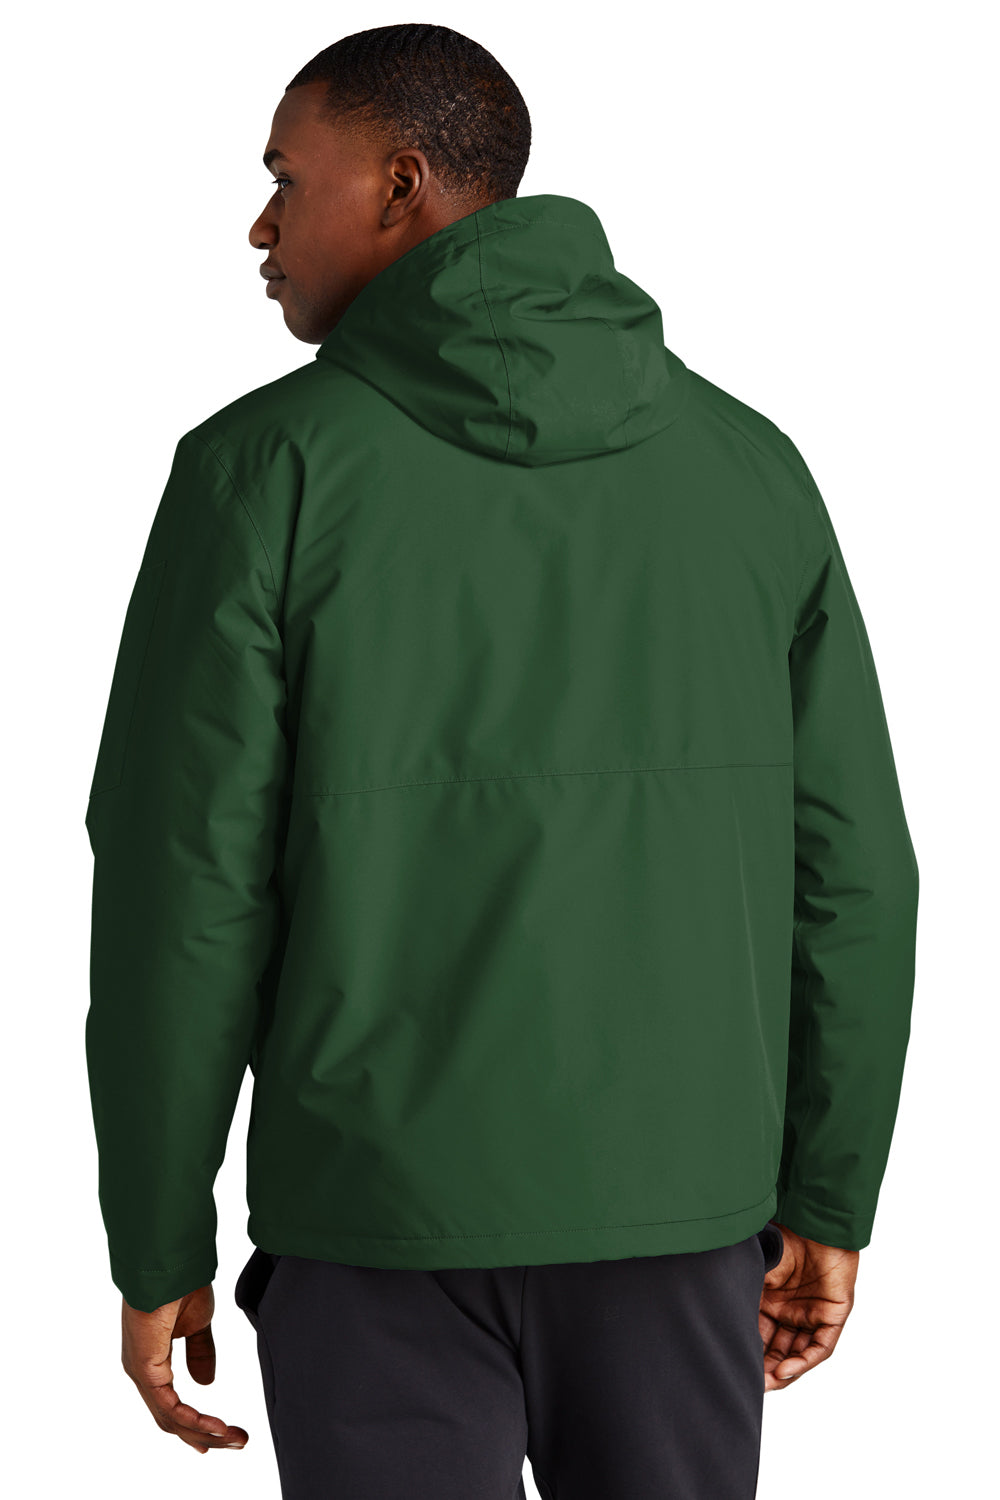 Sport-Tek JST56 Waterproof Insulated Full Zip Hooded Jacket Forest Green  Back